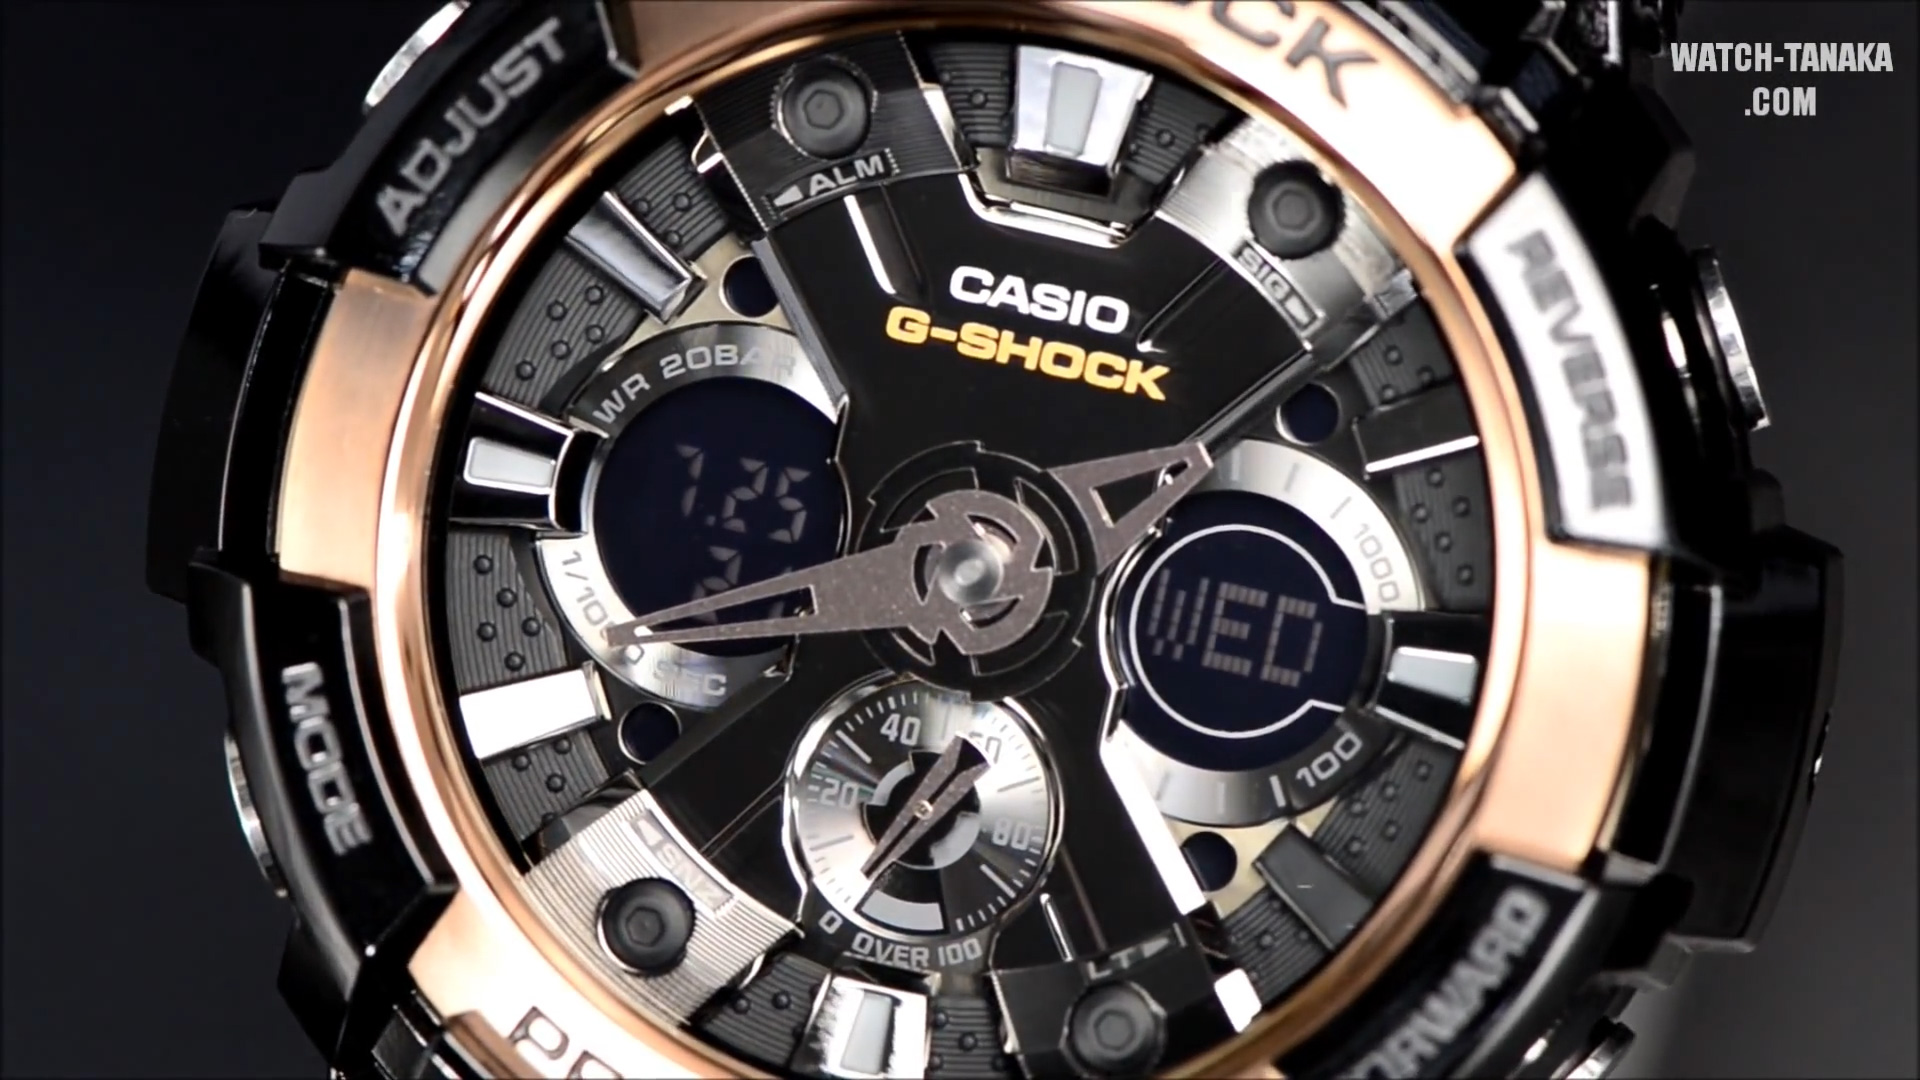 Casio G-shock Ga200rg - Hd Photos Of G Shock Watches - HD Wallpaper 